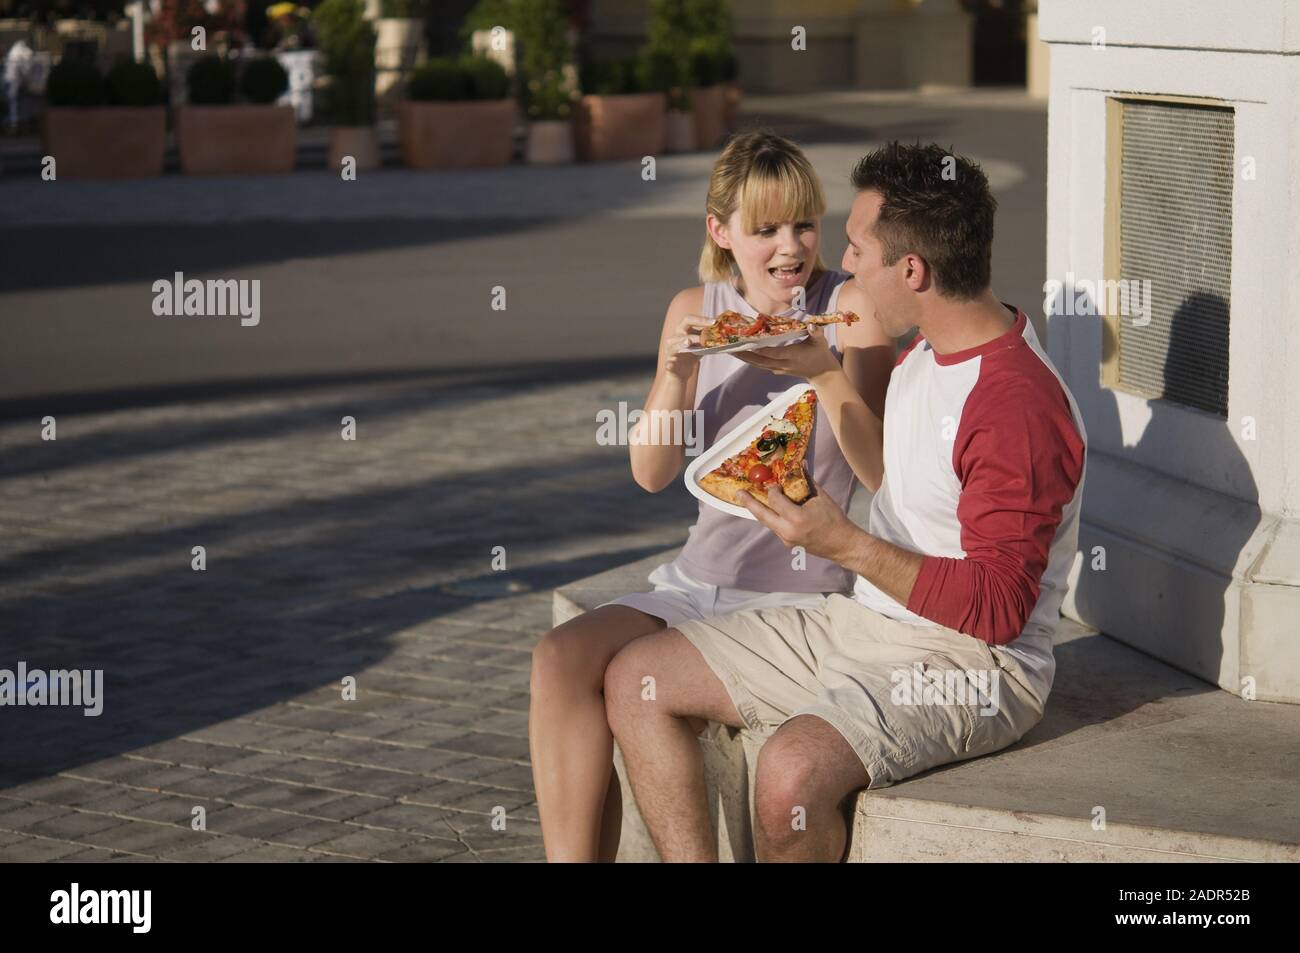 Junges Paar isst eine Pizzaschnitte - Coppia giovane mangiare la pizza all'aperto Foto Stock